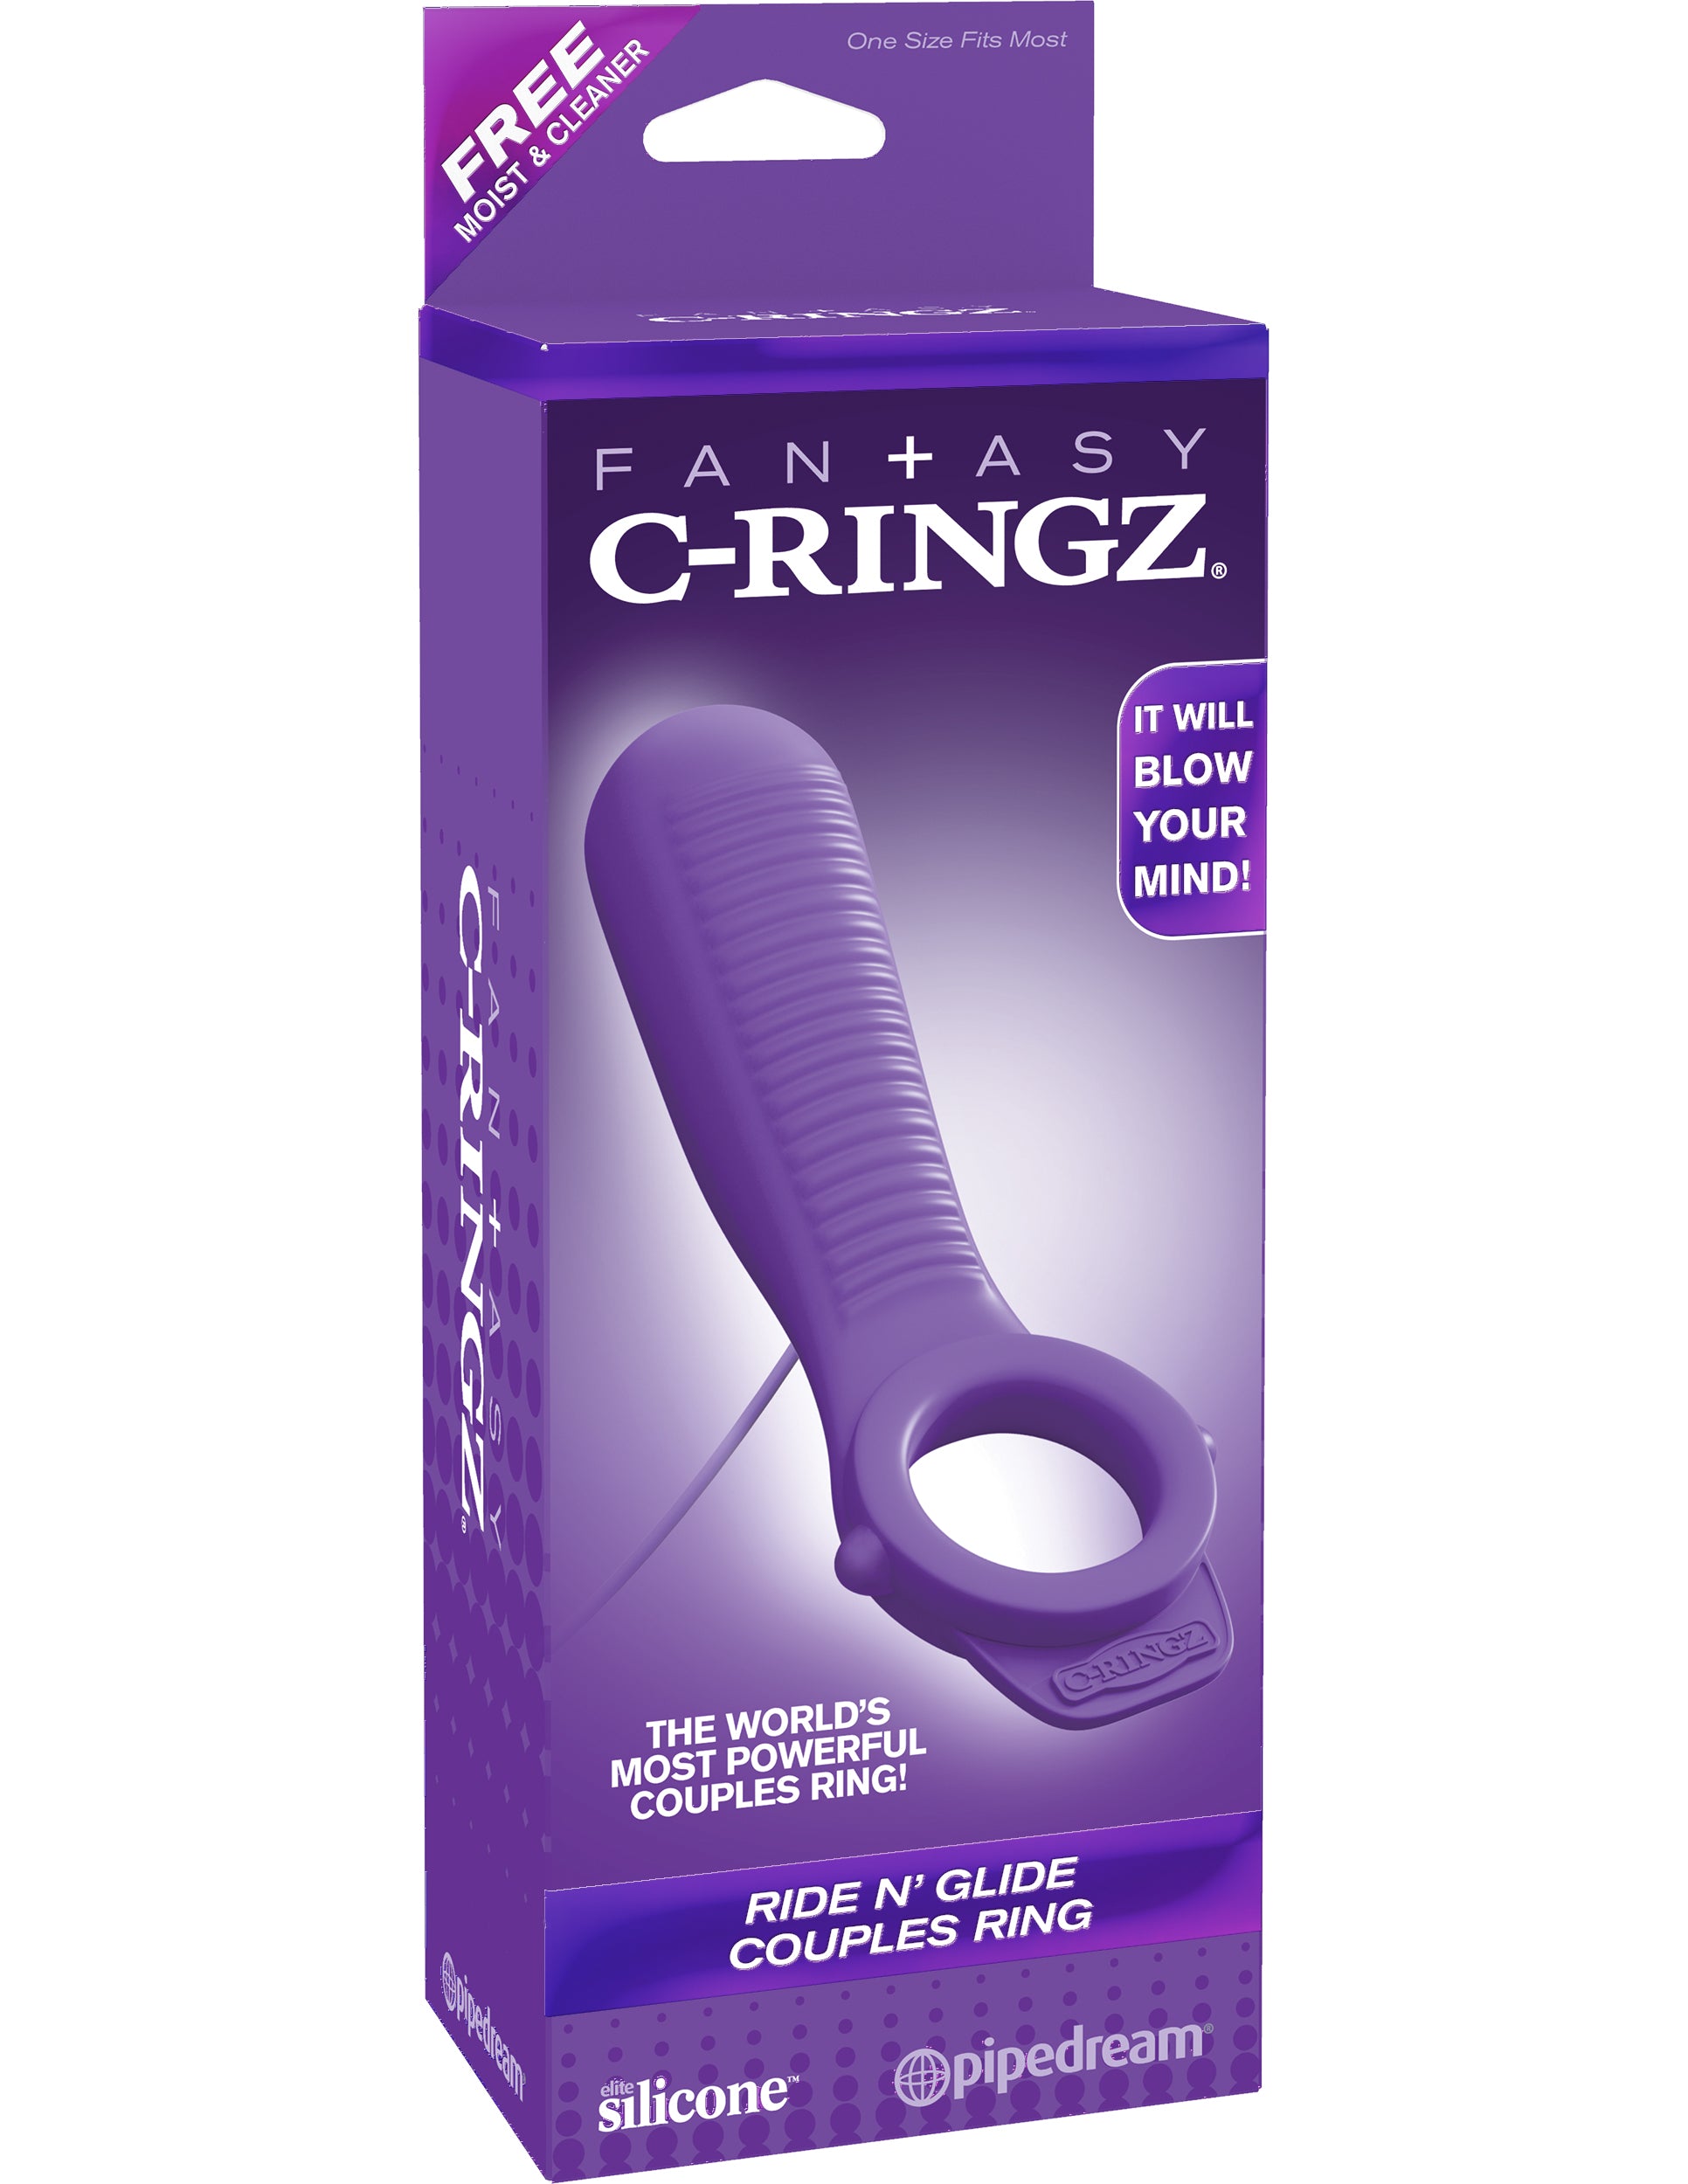 Fantasy C-ringz Ride N Glide Couples Ring